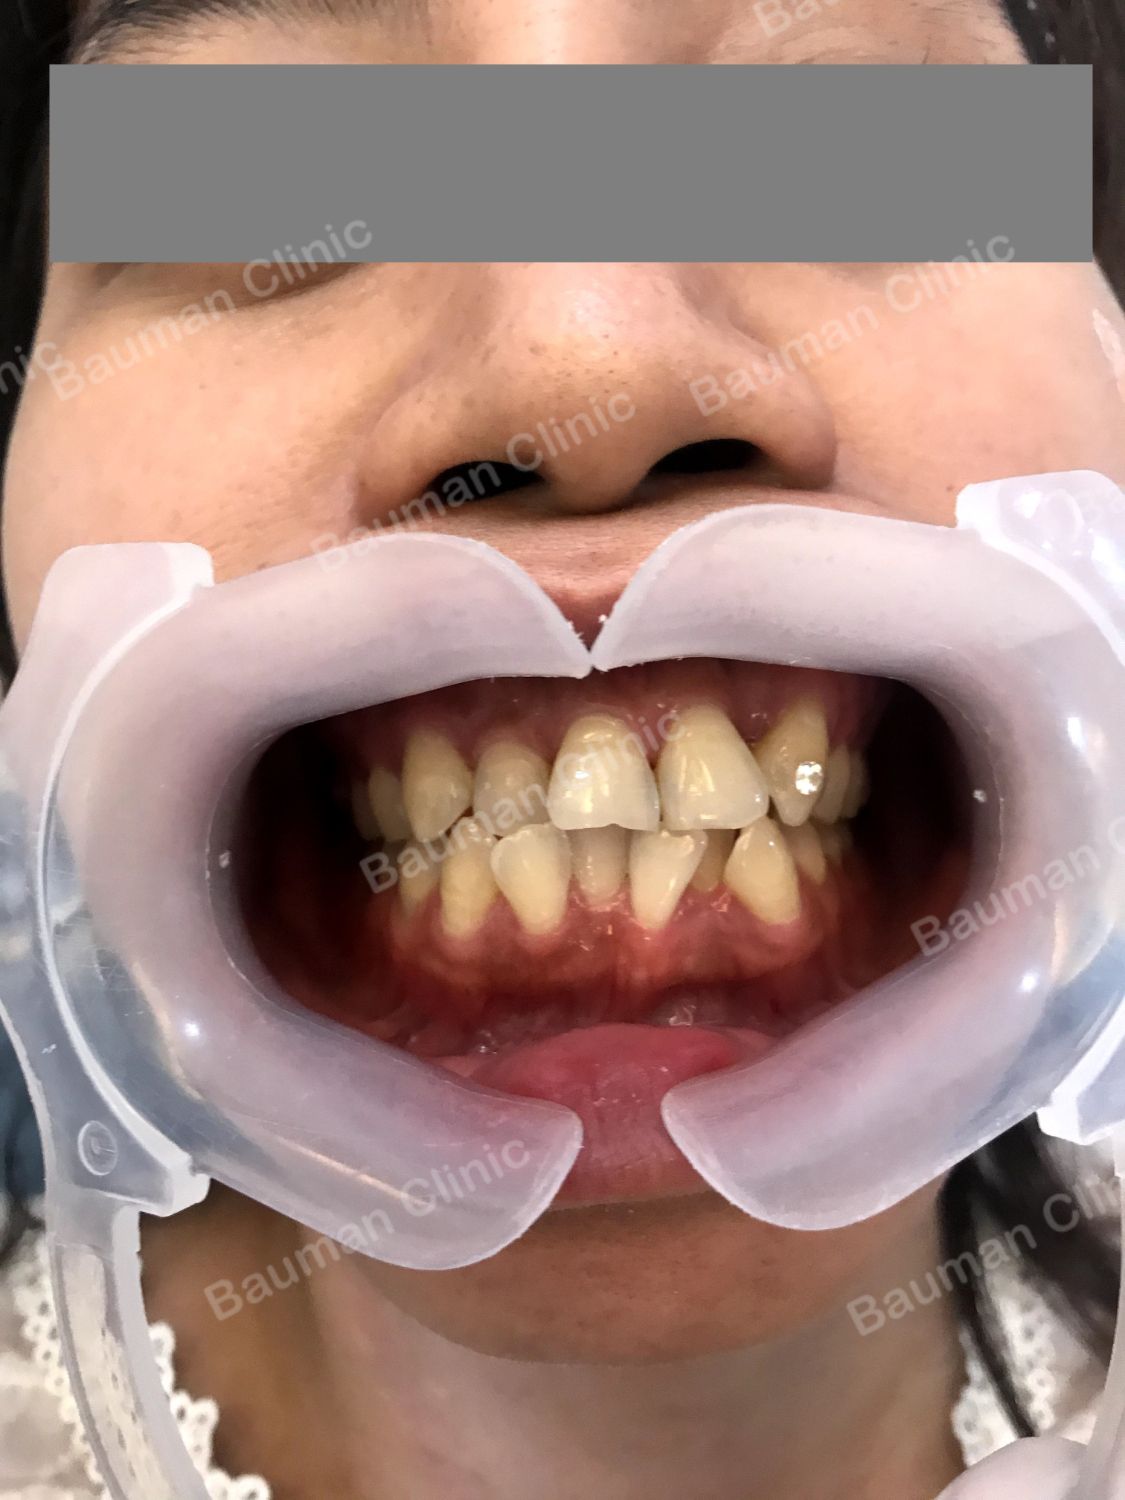 Ca niềng răng số 5019 - Nha khoa Bauman Clinic